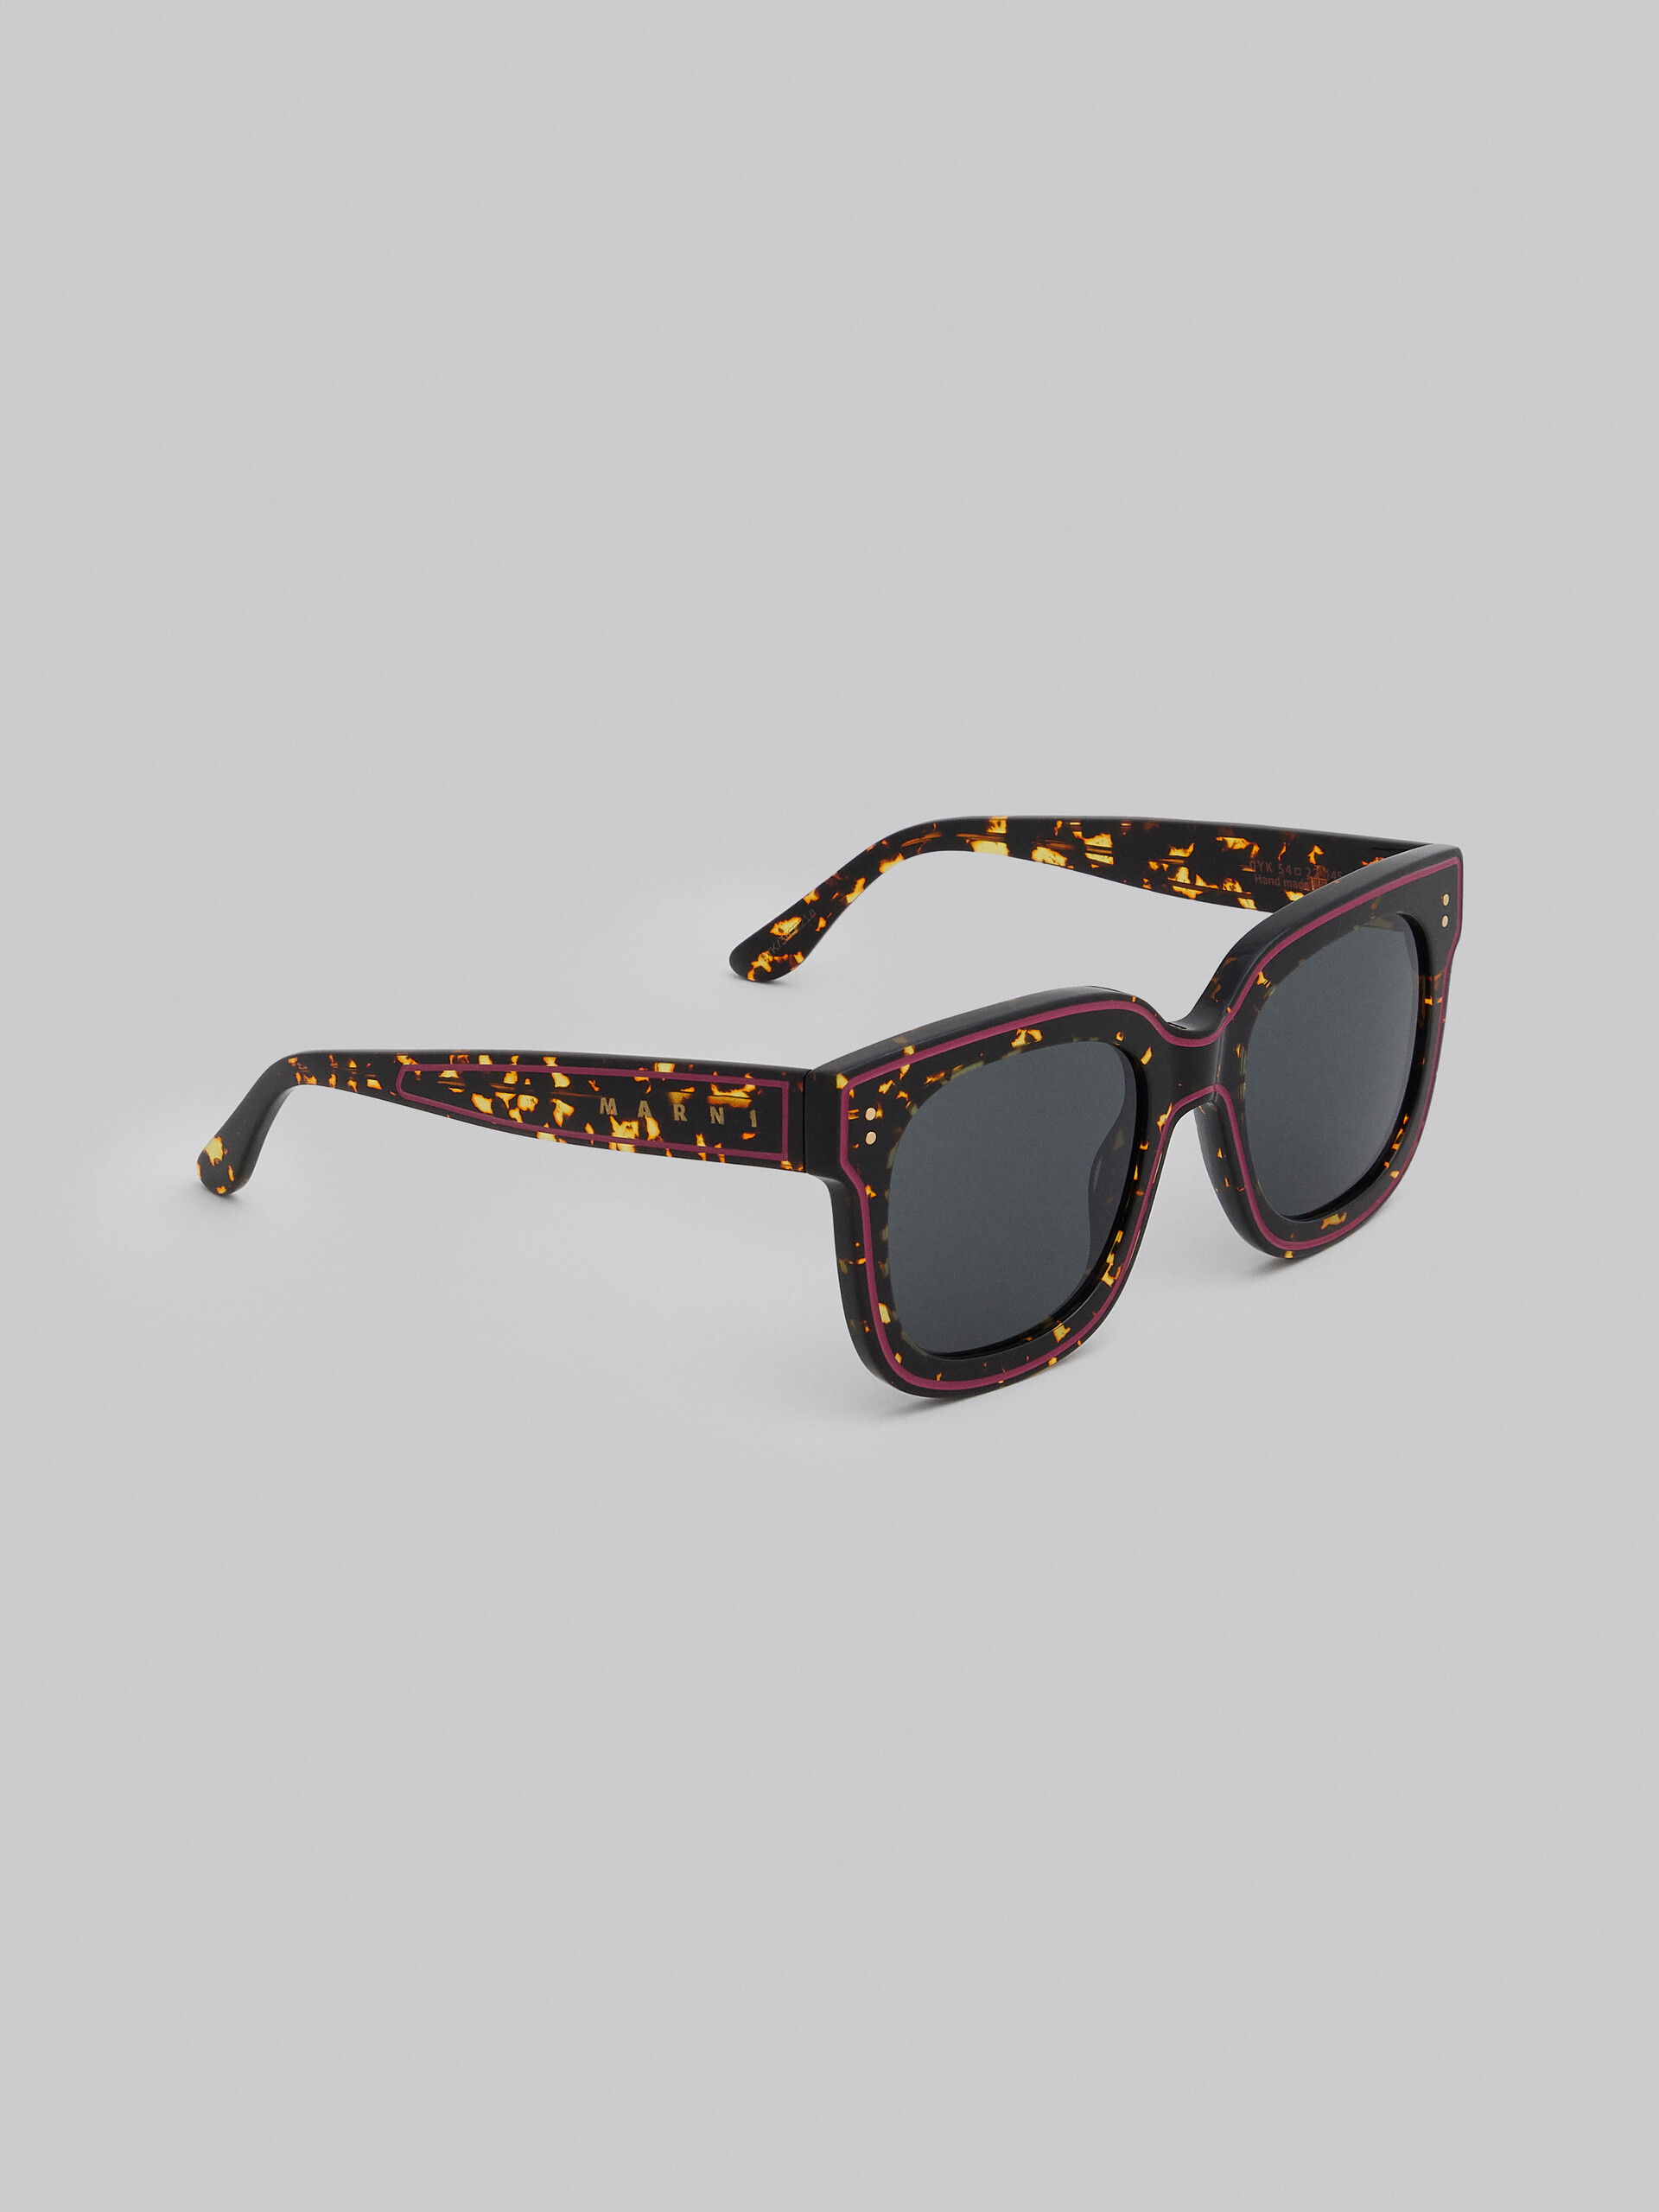 Black acetate LI RIVER sunglasses - Optical - Image 3